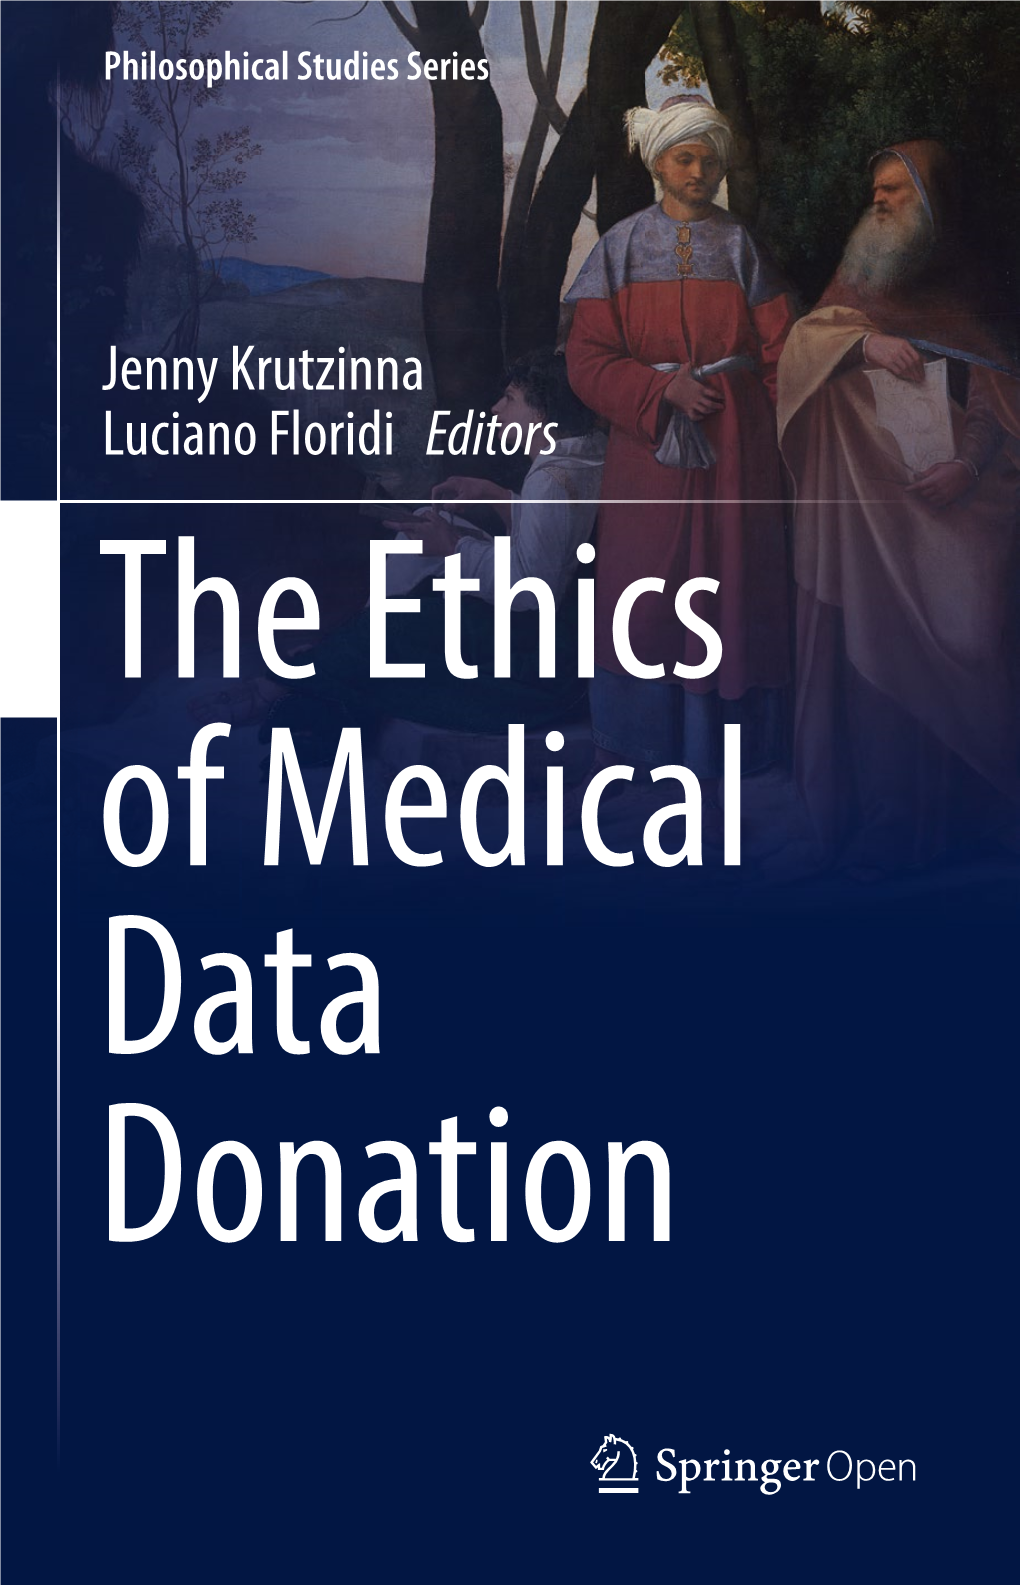 Jenny Krutzinna Luciano Floridi Editors the Ethics of Medical Data Donation Philosophical Studies Series